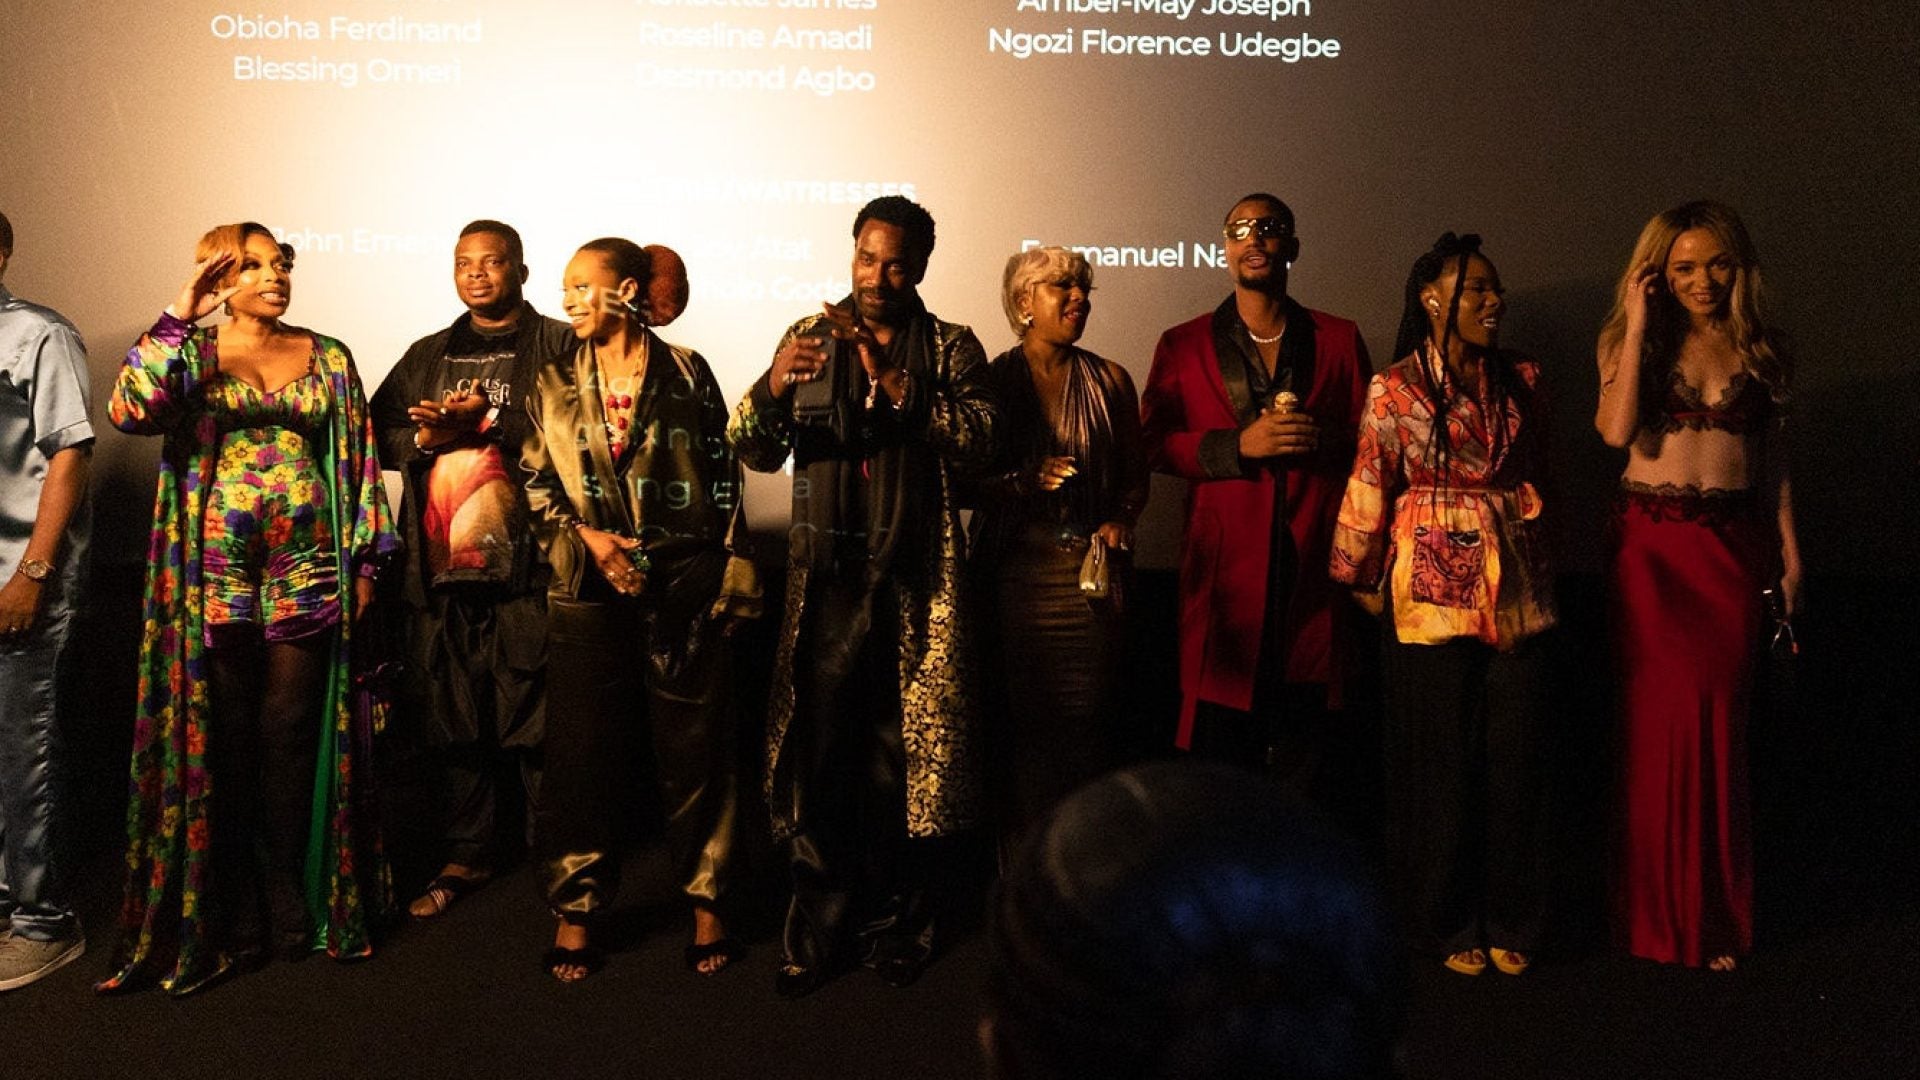 Take A Peek Inside The Movie Premiere Of EbonyLife’s “A Sunday Affair” In Lagos, Nigeria